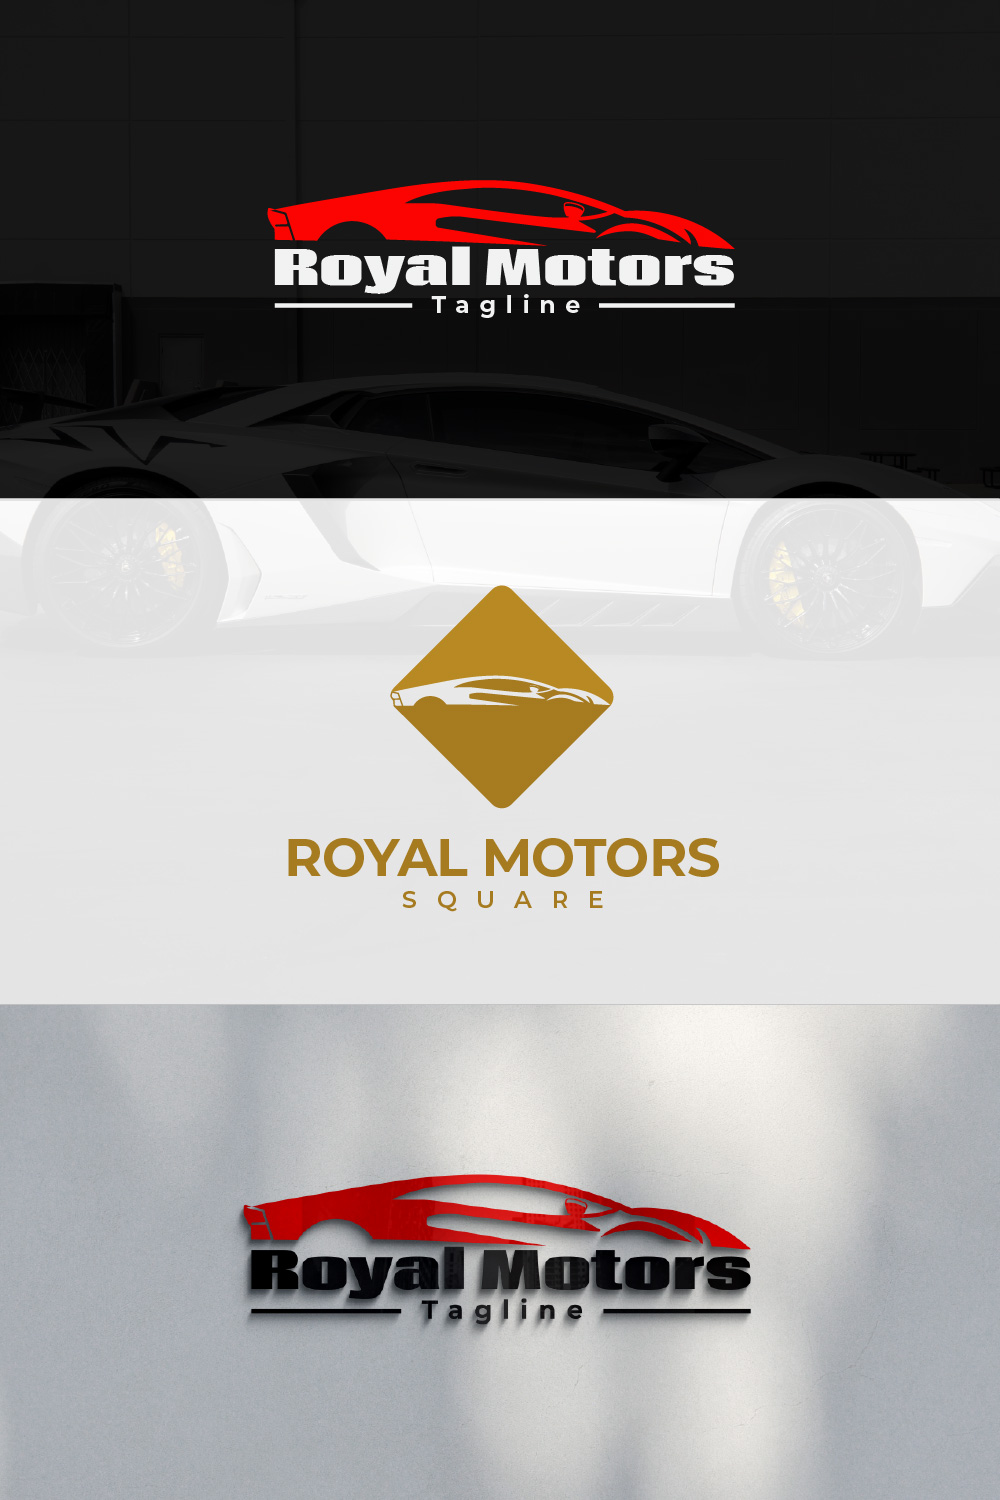 Royal Motors Lamborghini Logo Template Pinterest image.